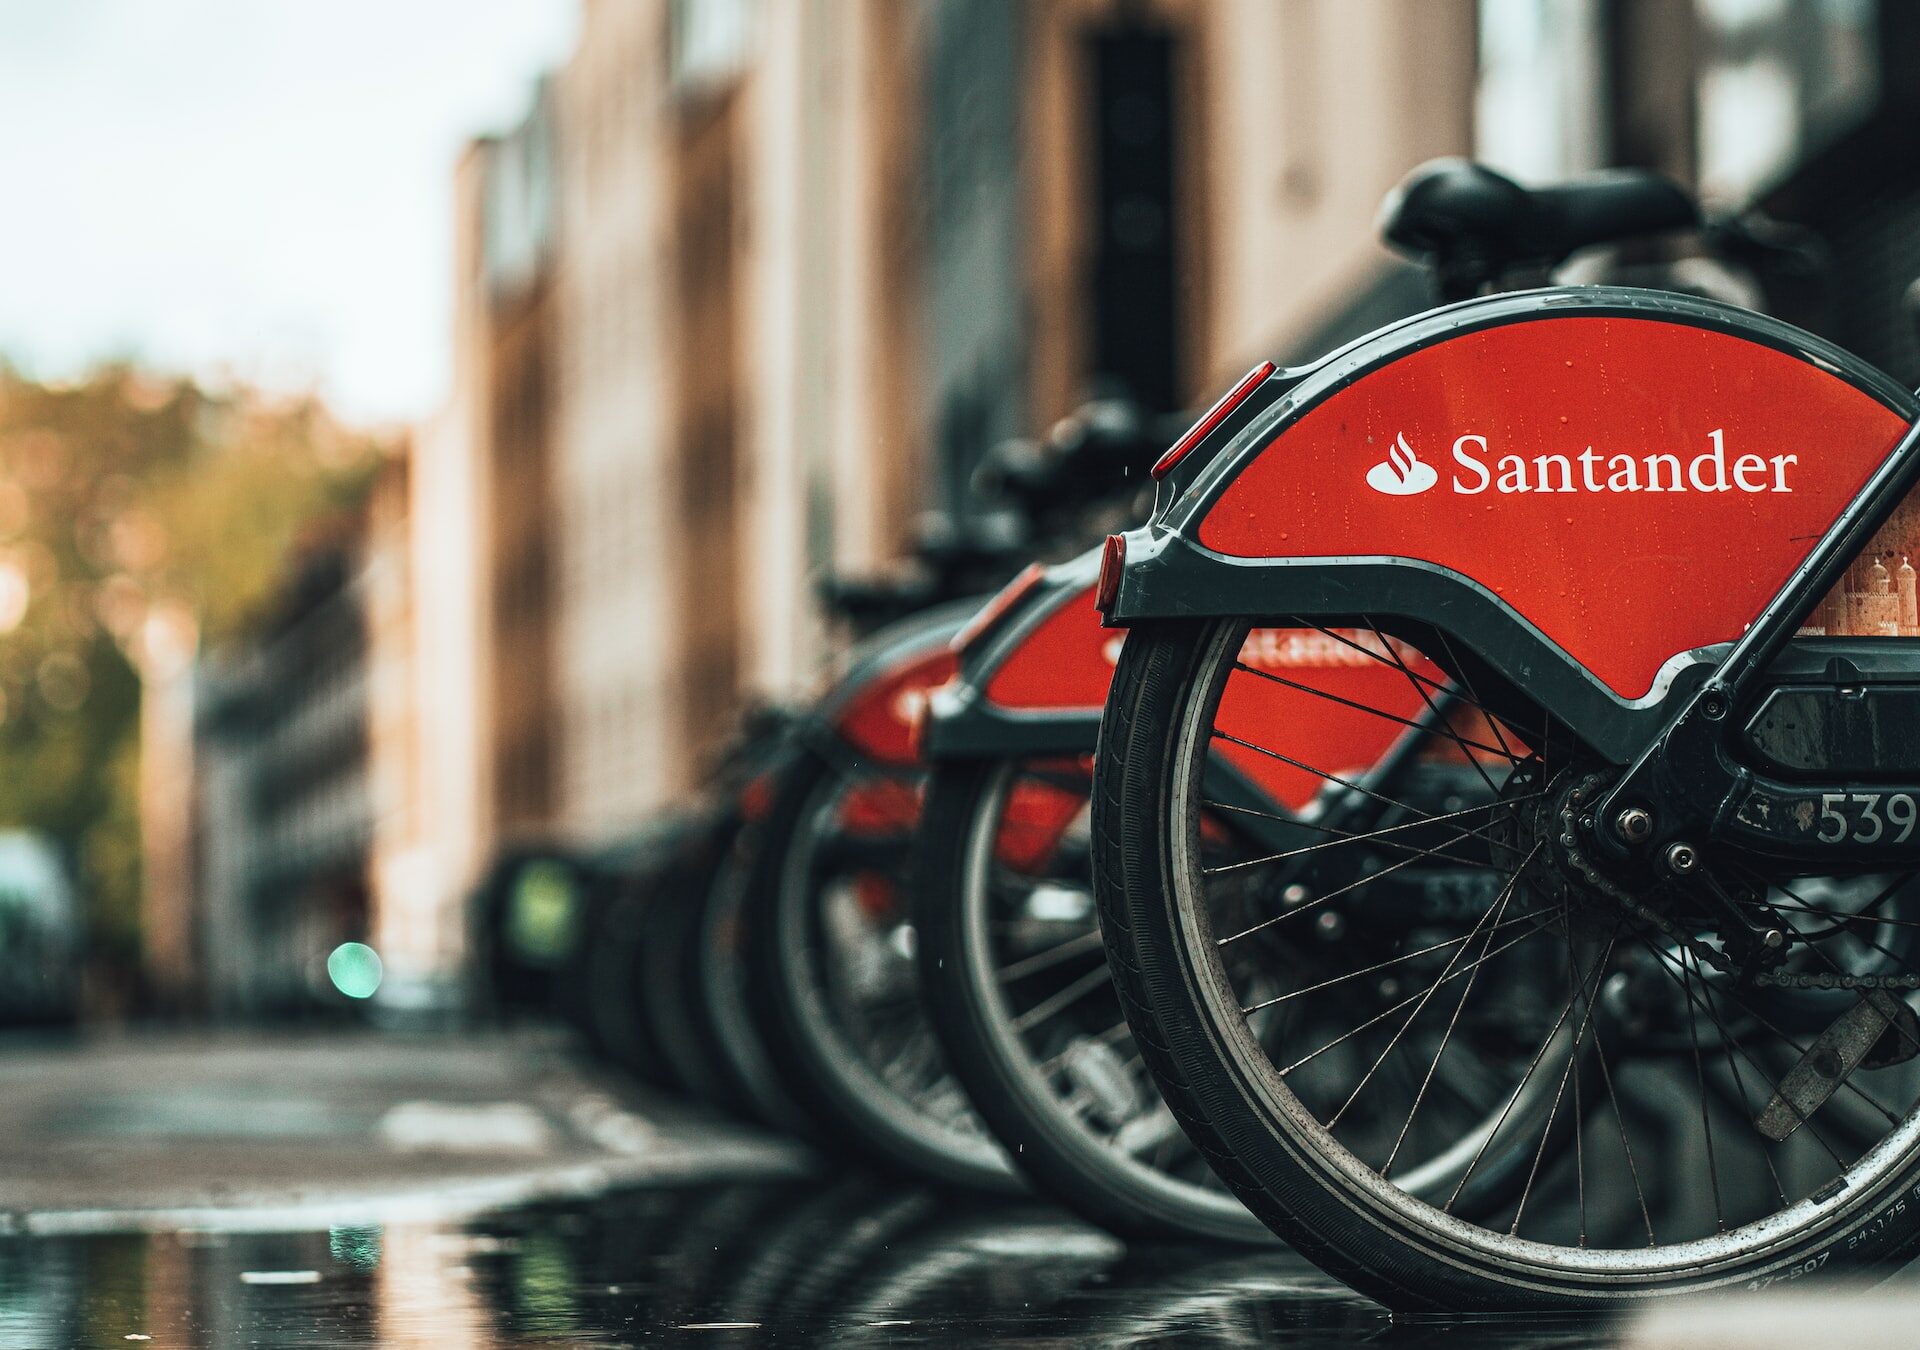 images of bikes | Salesforce and Santander